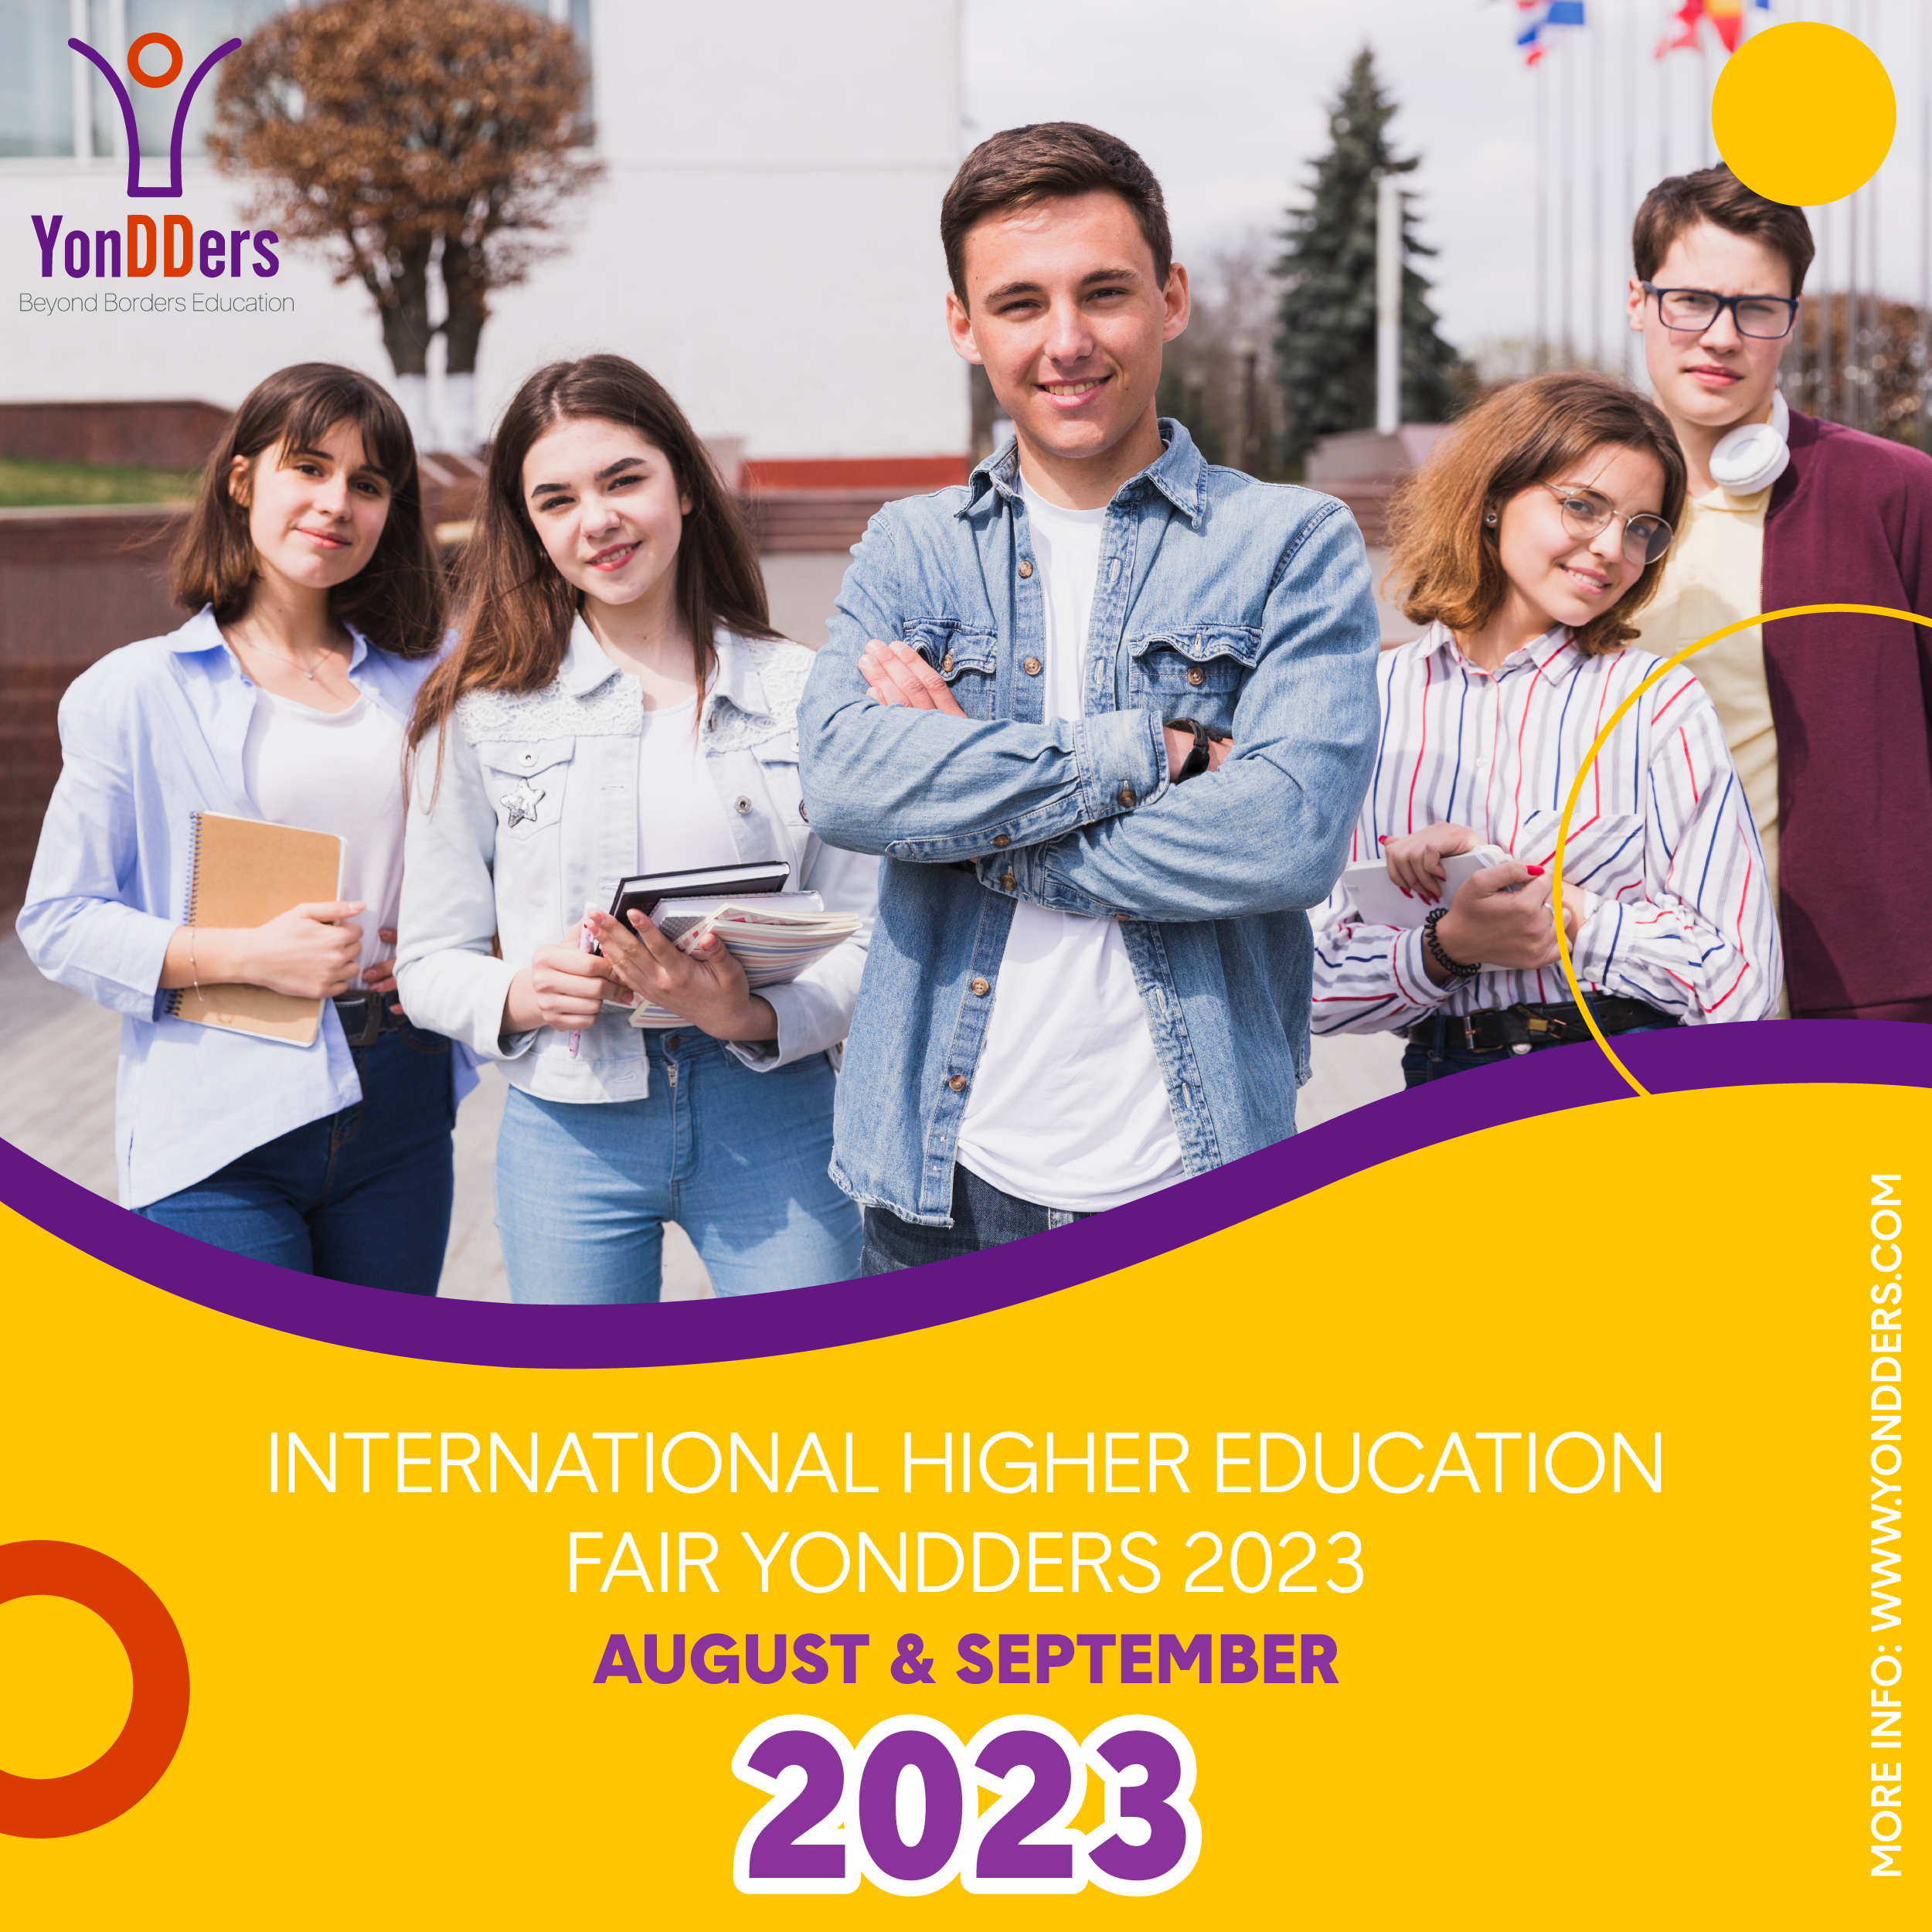 INTERNATIONAL HIGHER EDUCATION FAIR: AUGUST & SEPTEMBER 2023